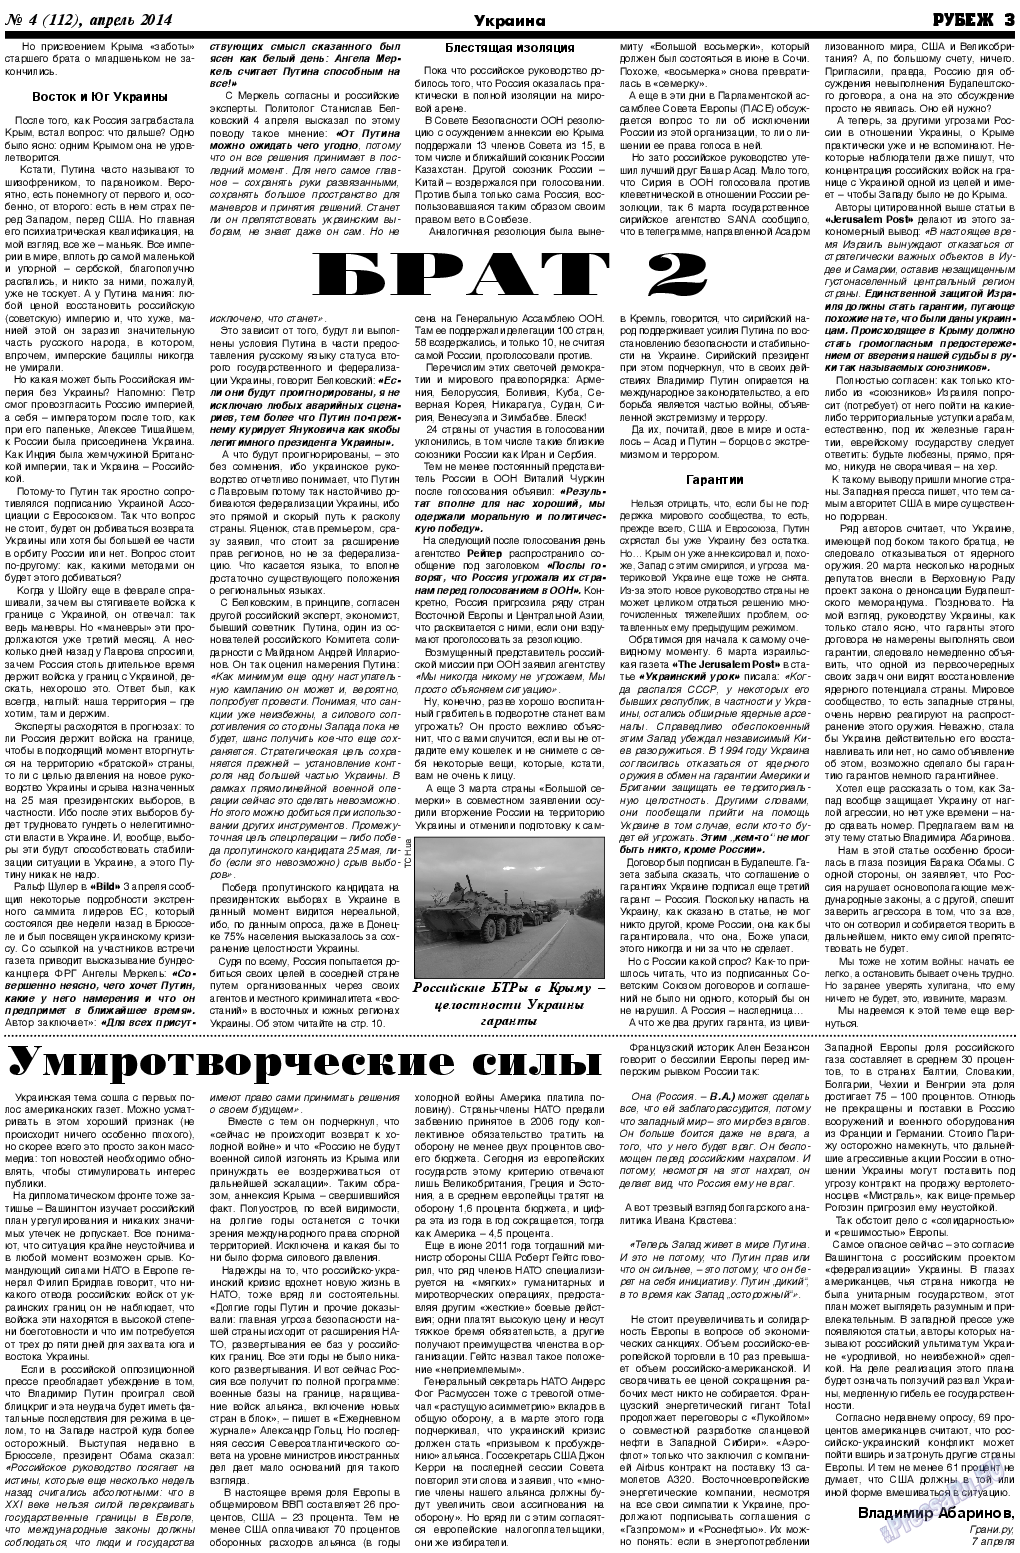 Рубеж, газета. 2014 №4 стр.3